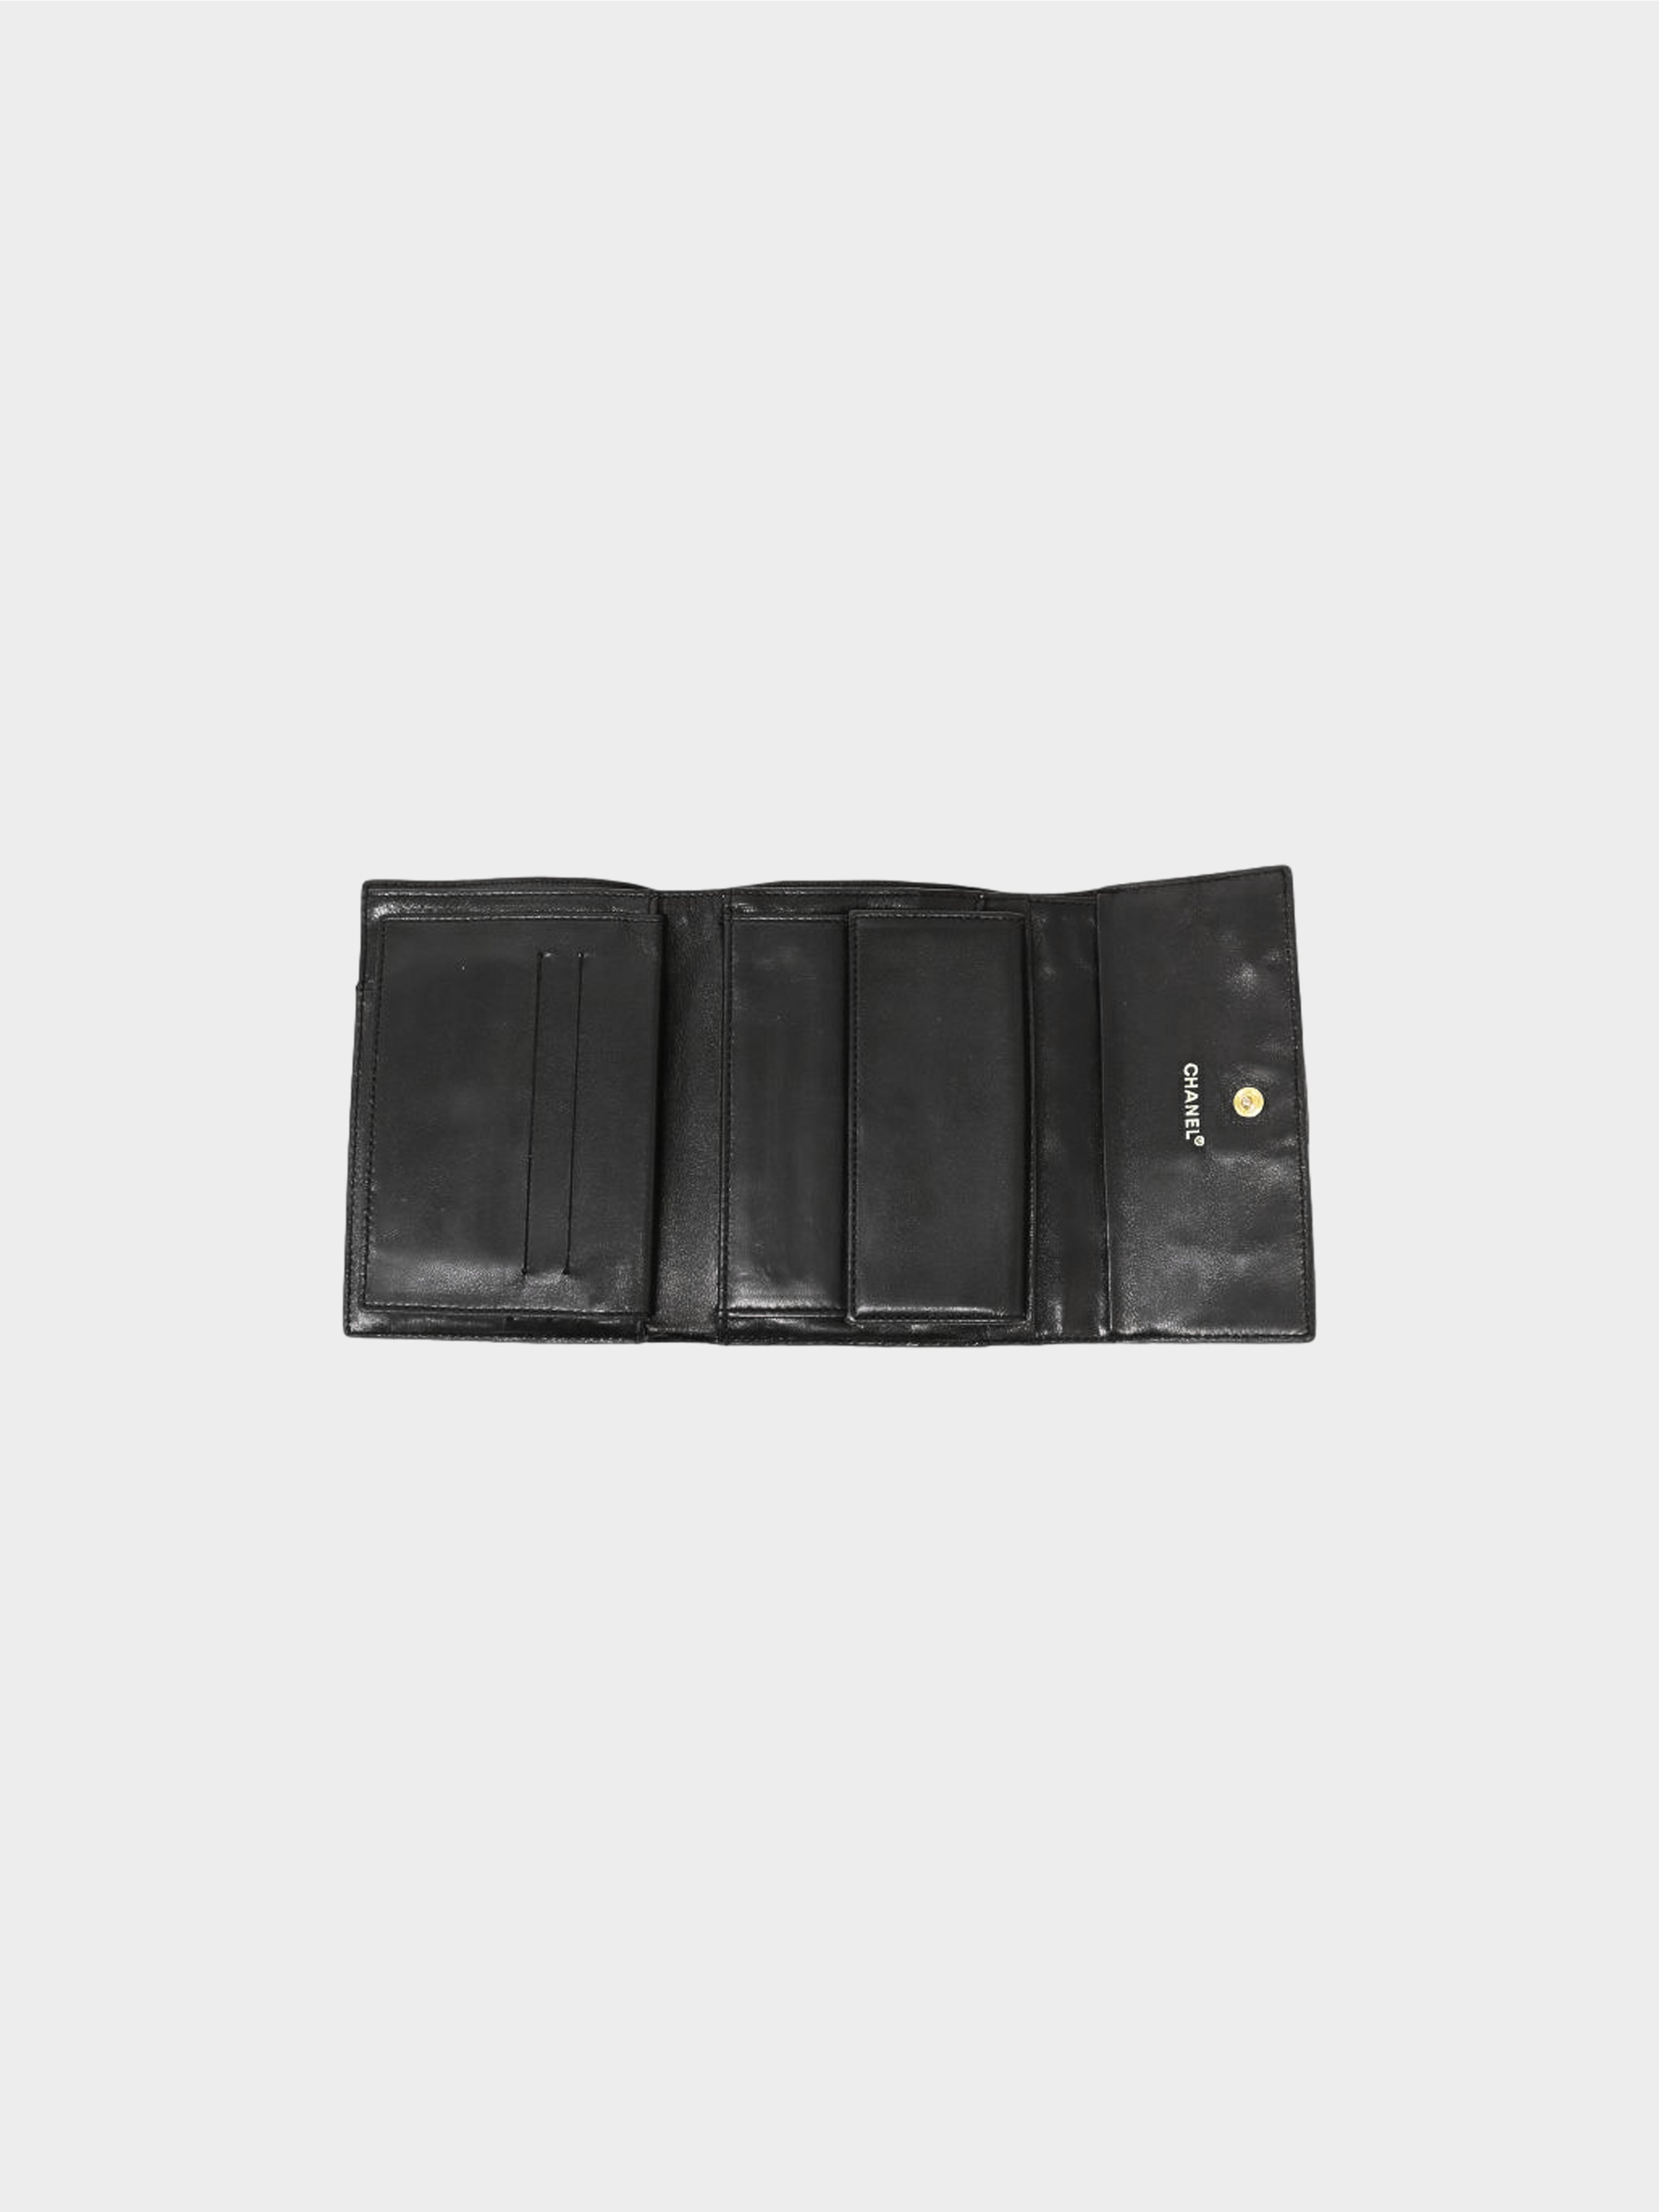 Chanel 2001-2002 Black Chocolate Bar Lambskin Wallet